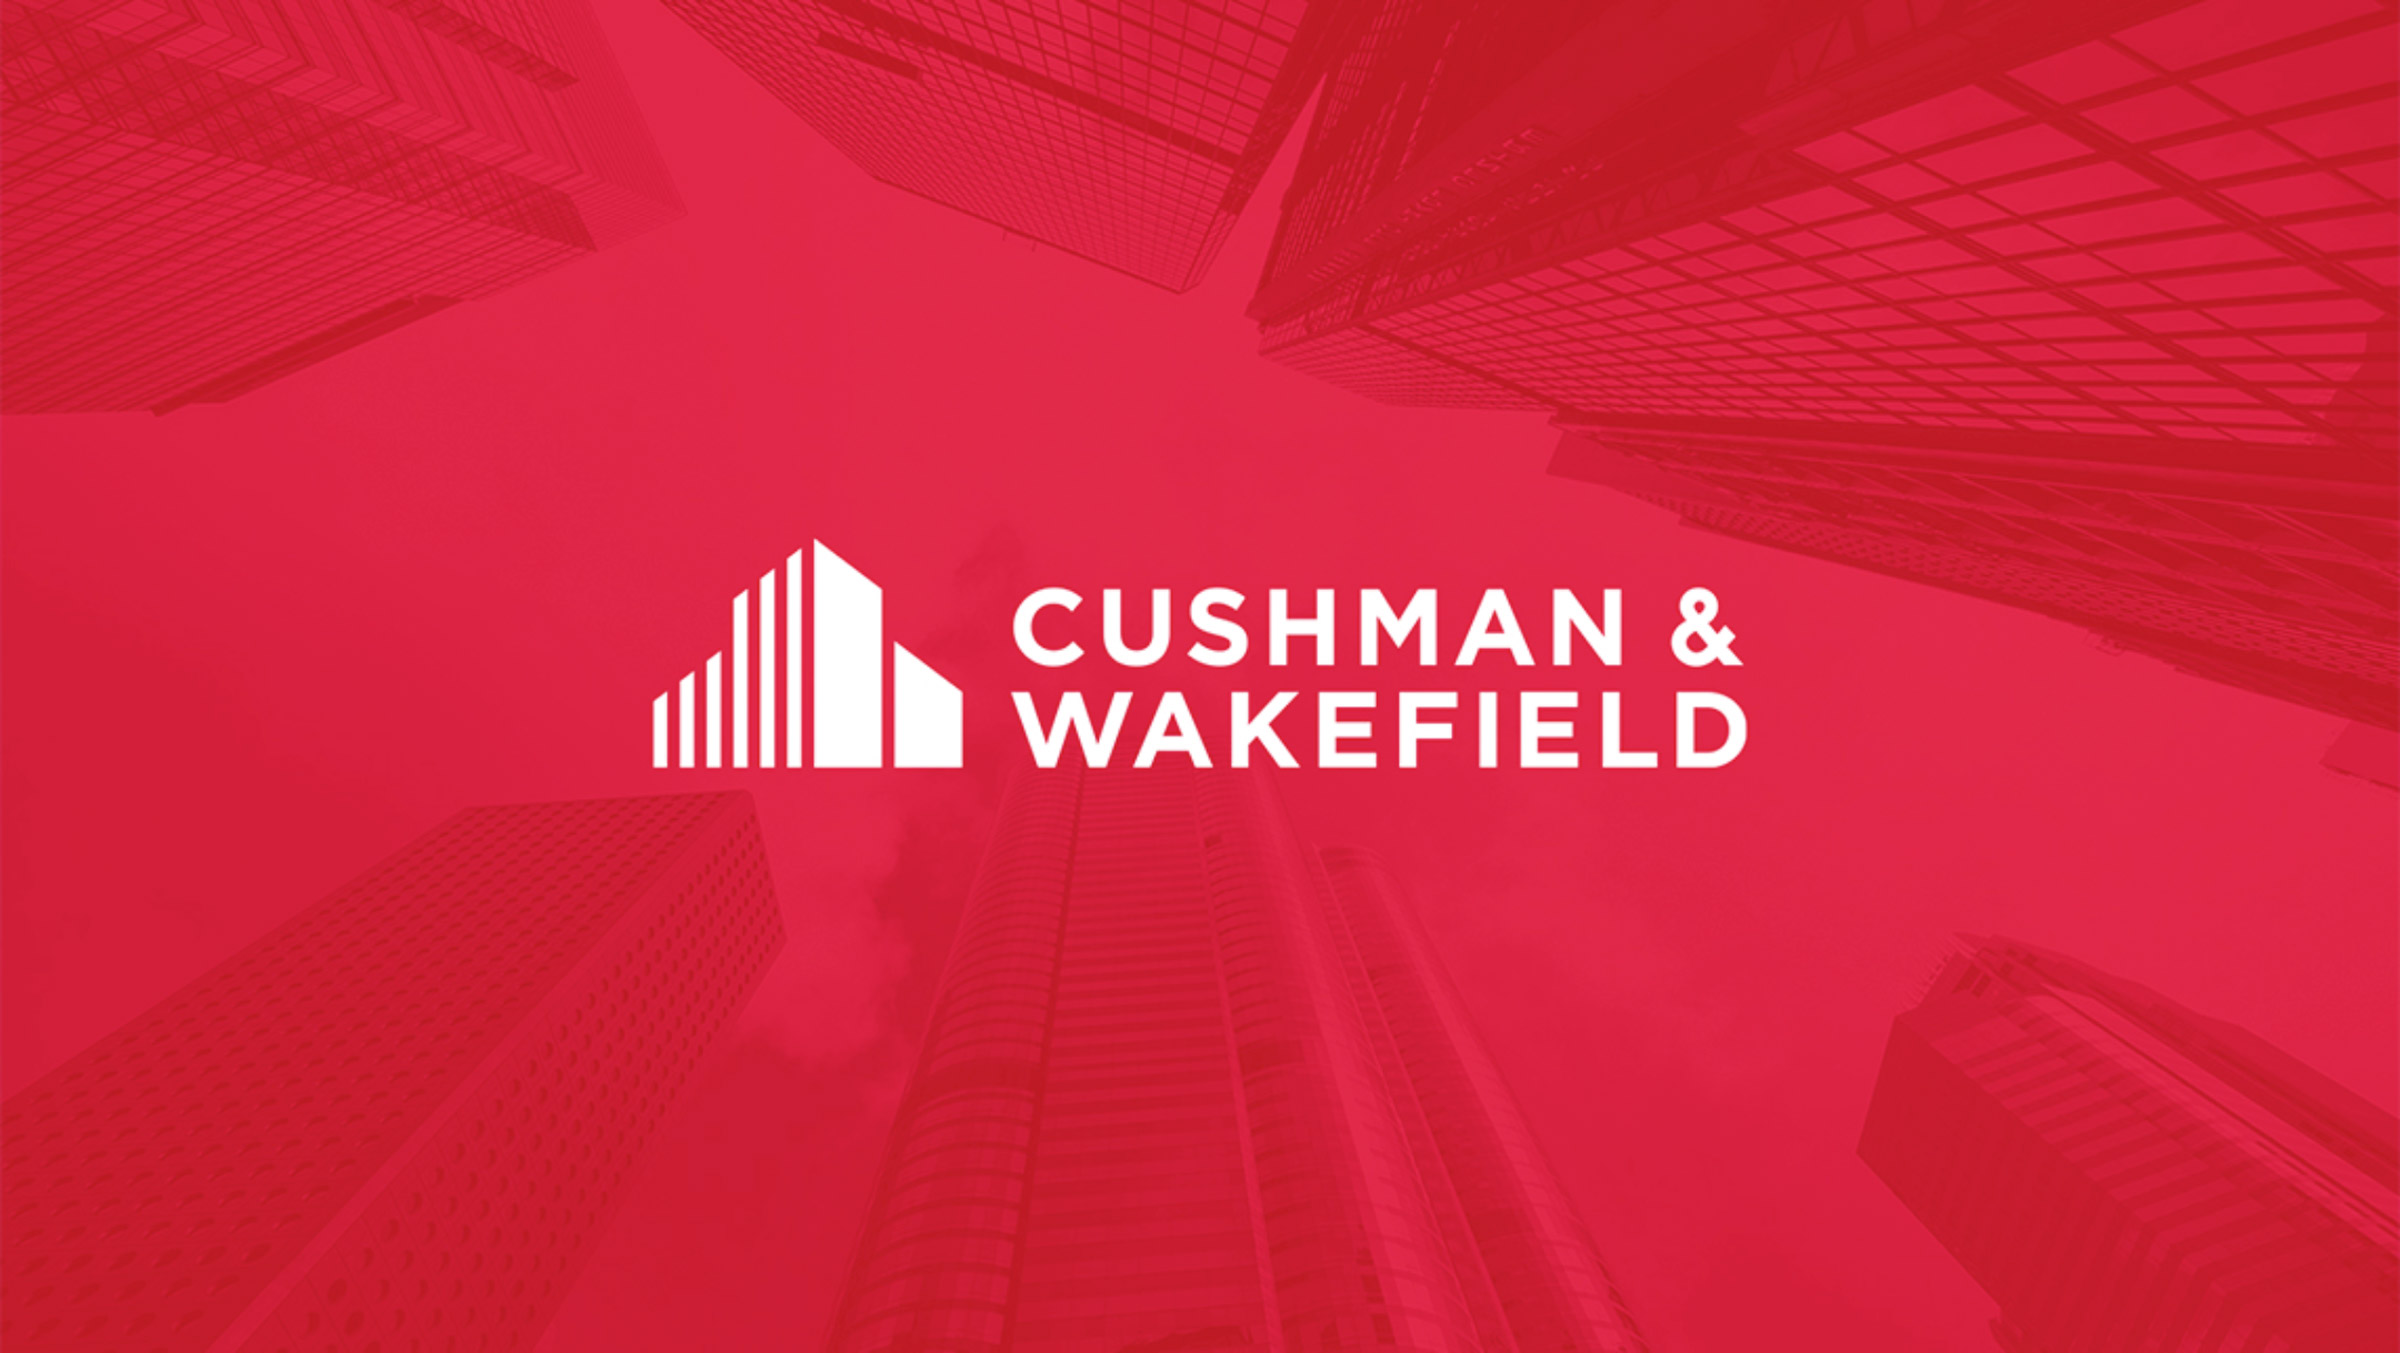 Cushman Wakefield Identity | Solid Case Study